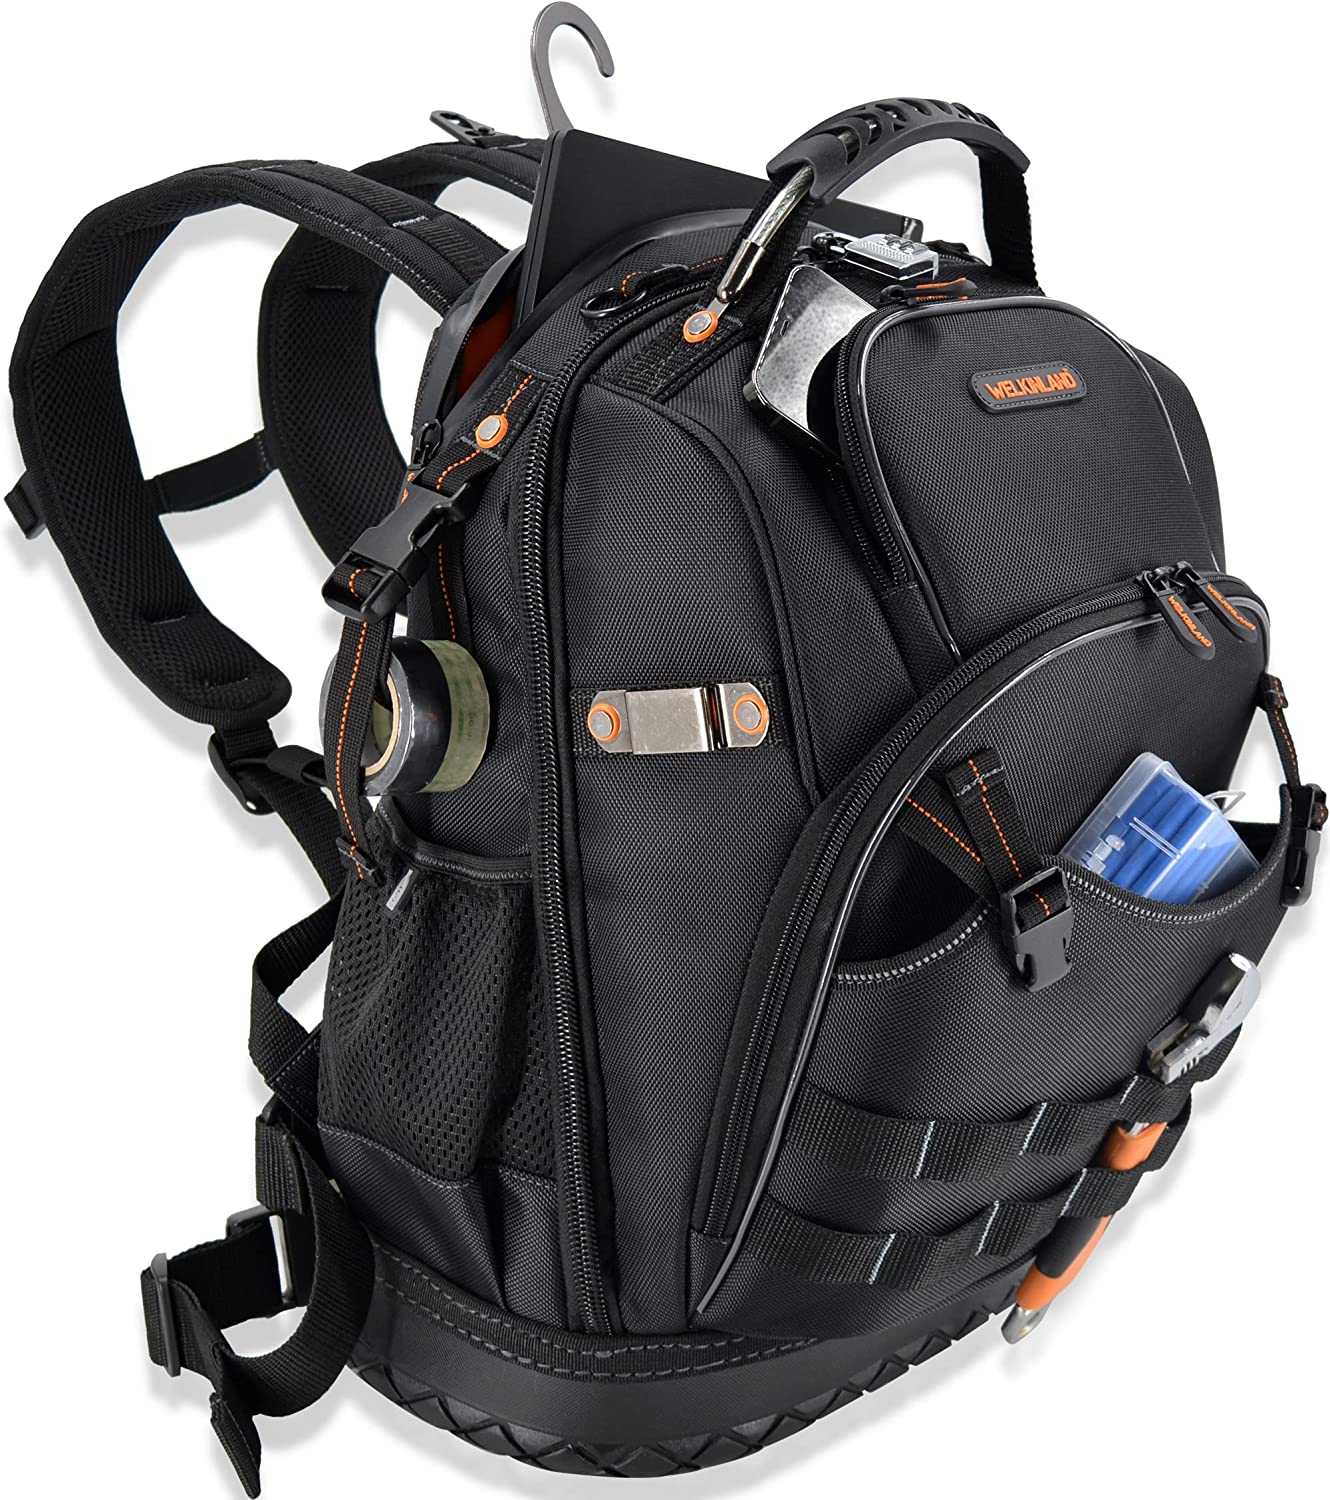 77-Pockets Tool backpack for men, HVAC tool bag backpack, Large electrician backpack for electricians, construction - image 1 of 9